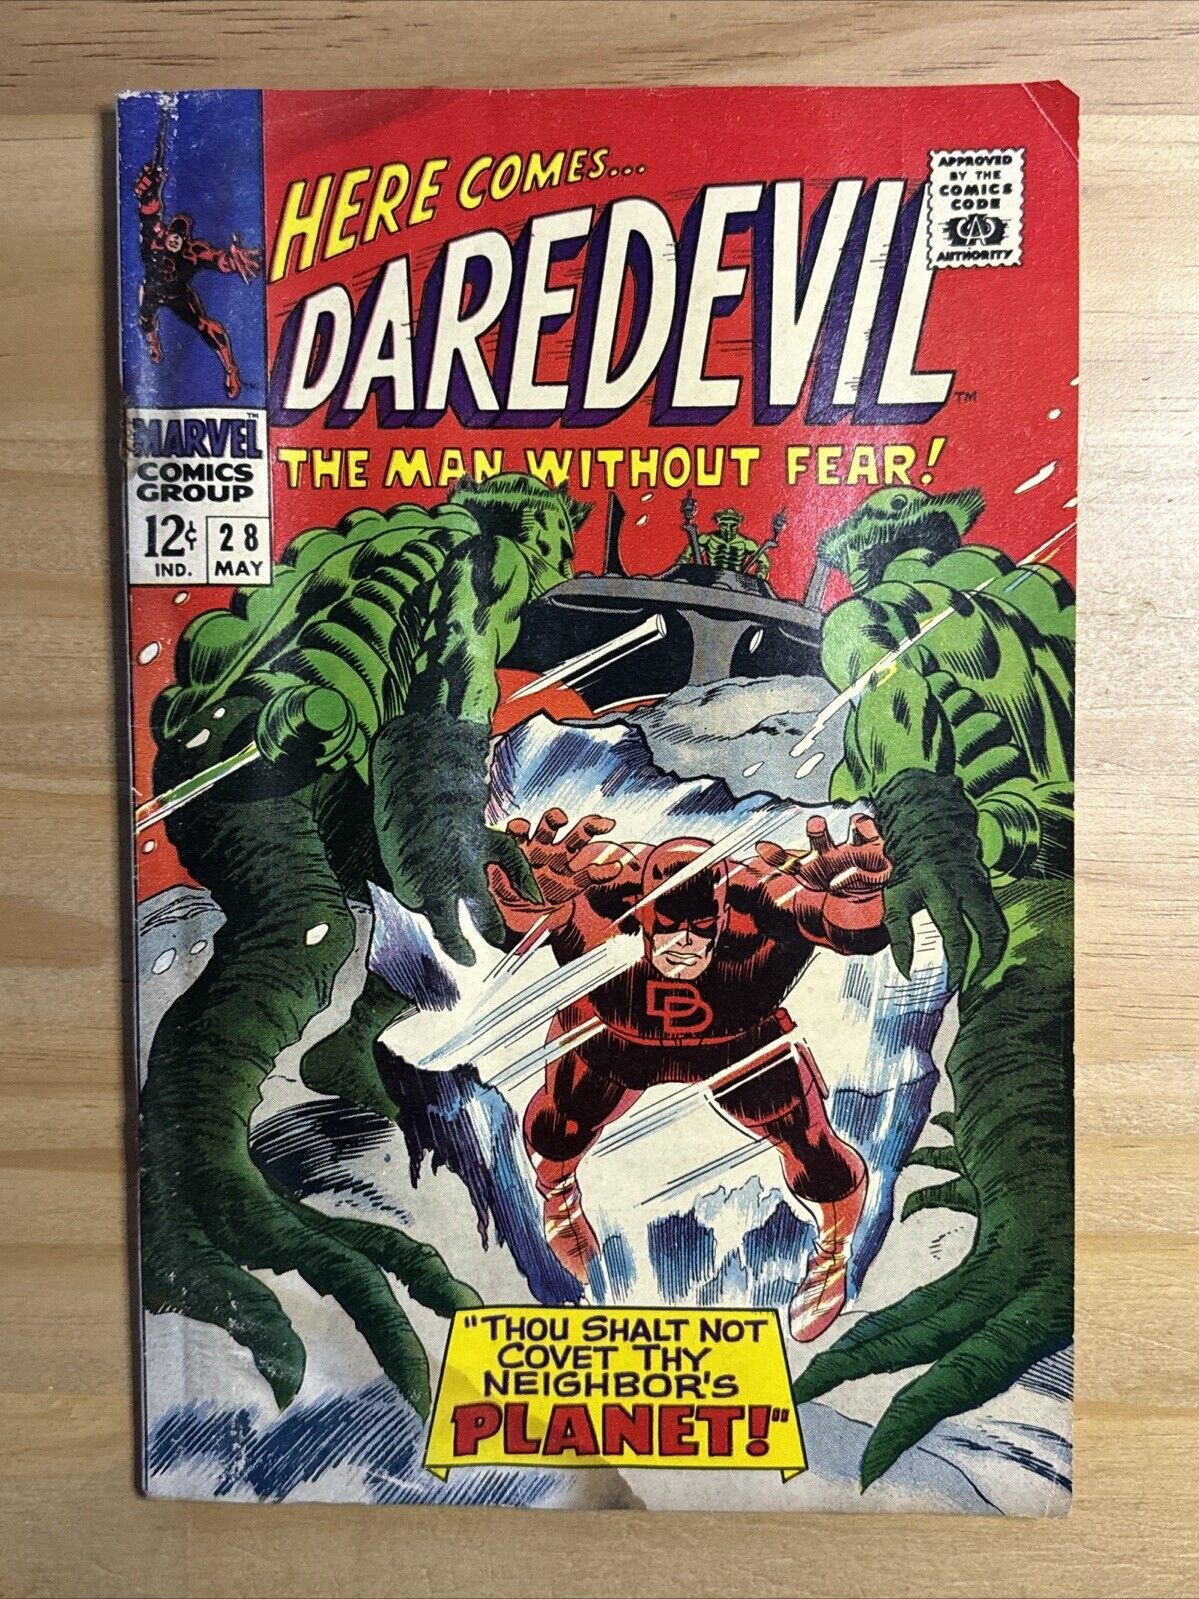 Daredevil #28 1967 Silver Age Marvel Comics by Stan Lee & Gene Colan